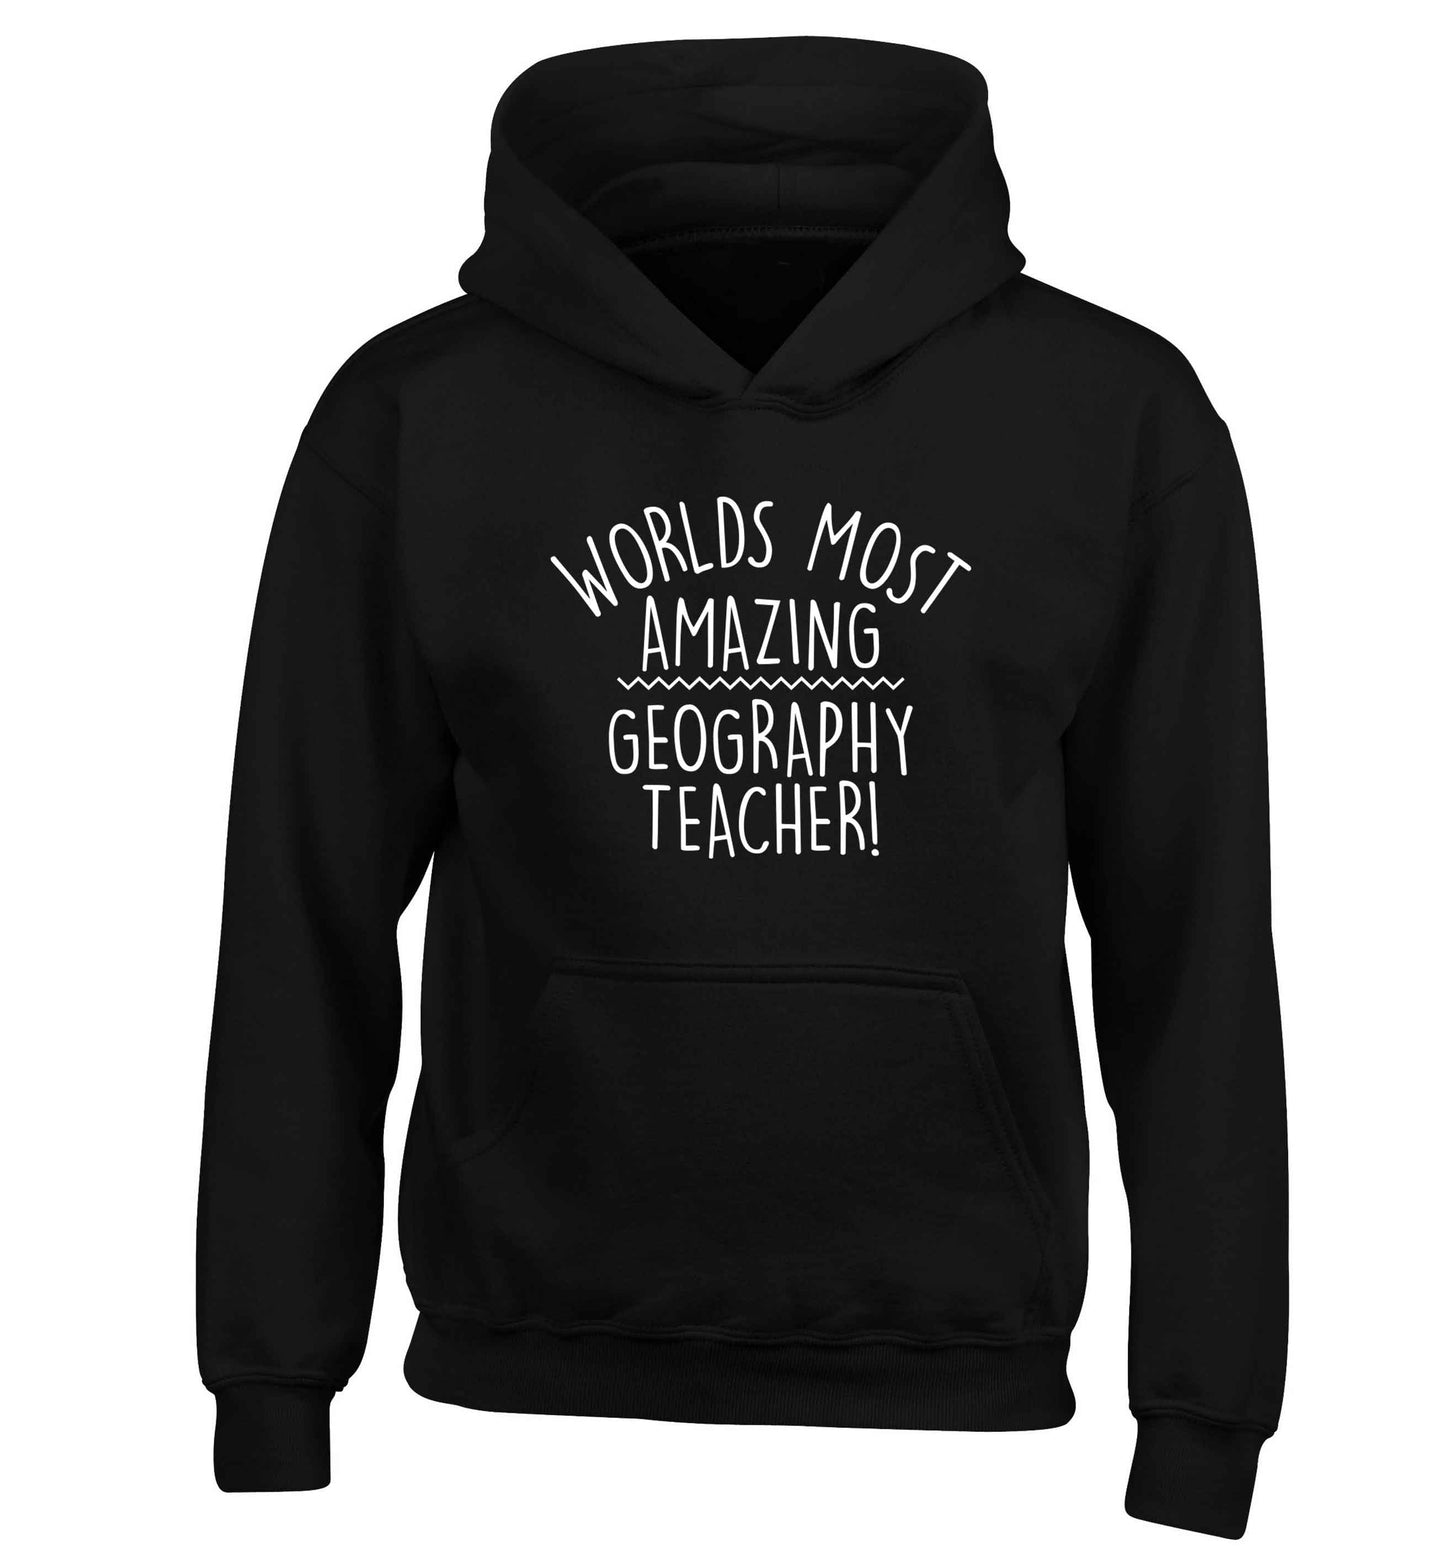 Worlds most amazing geography teacher children's black hoodie 12-13 Years